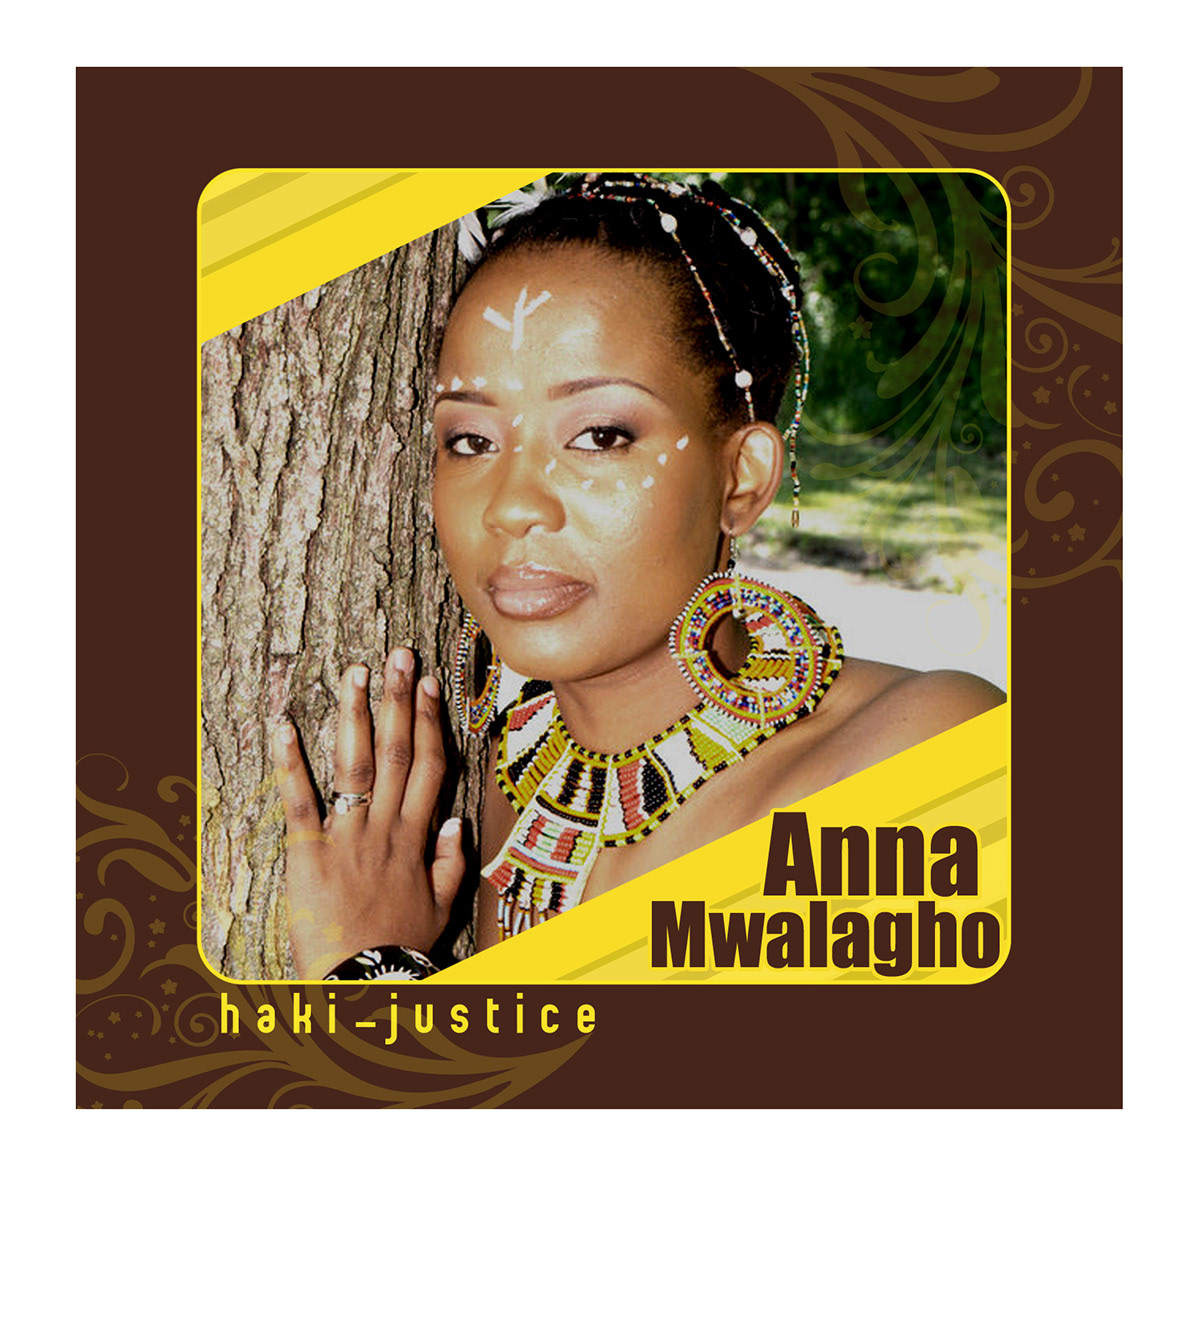 Anna Mwalagho Mwalagho kenya african Singer poet Album Arkwork usa design musician